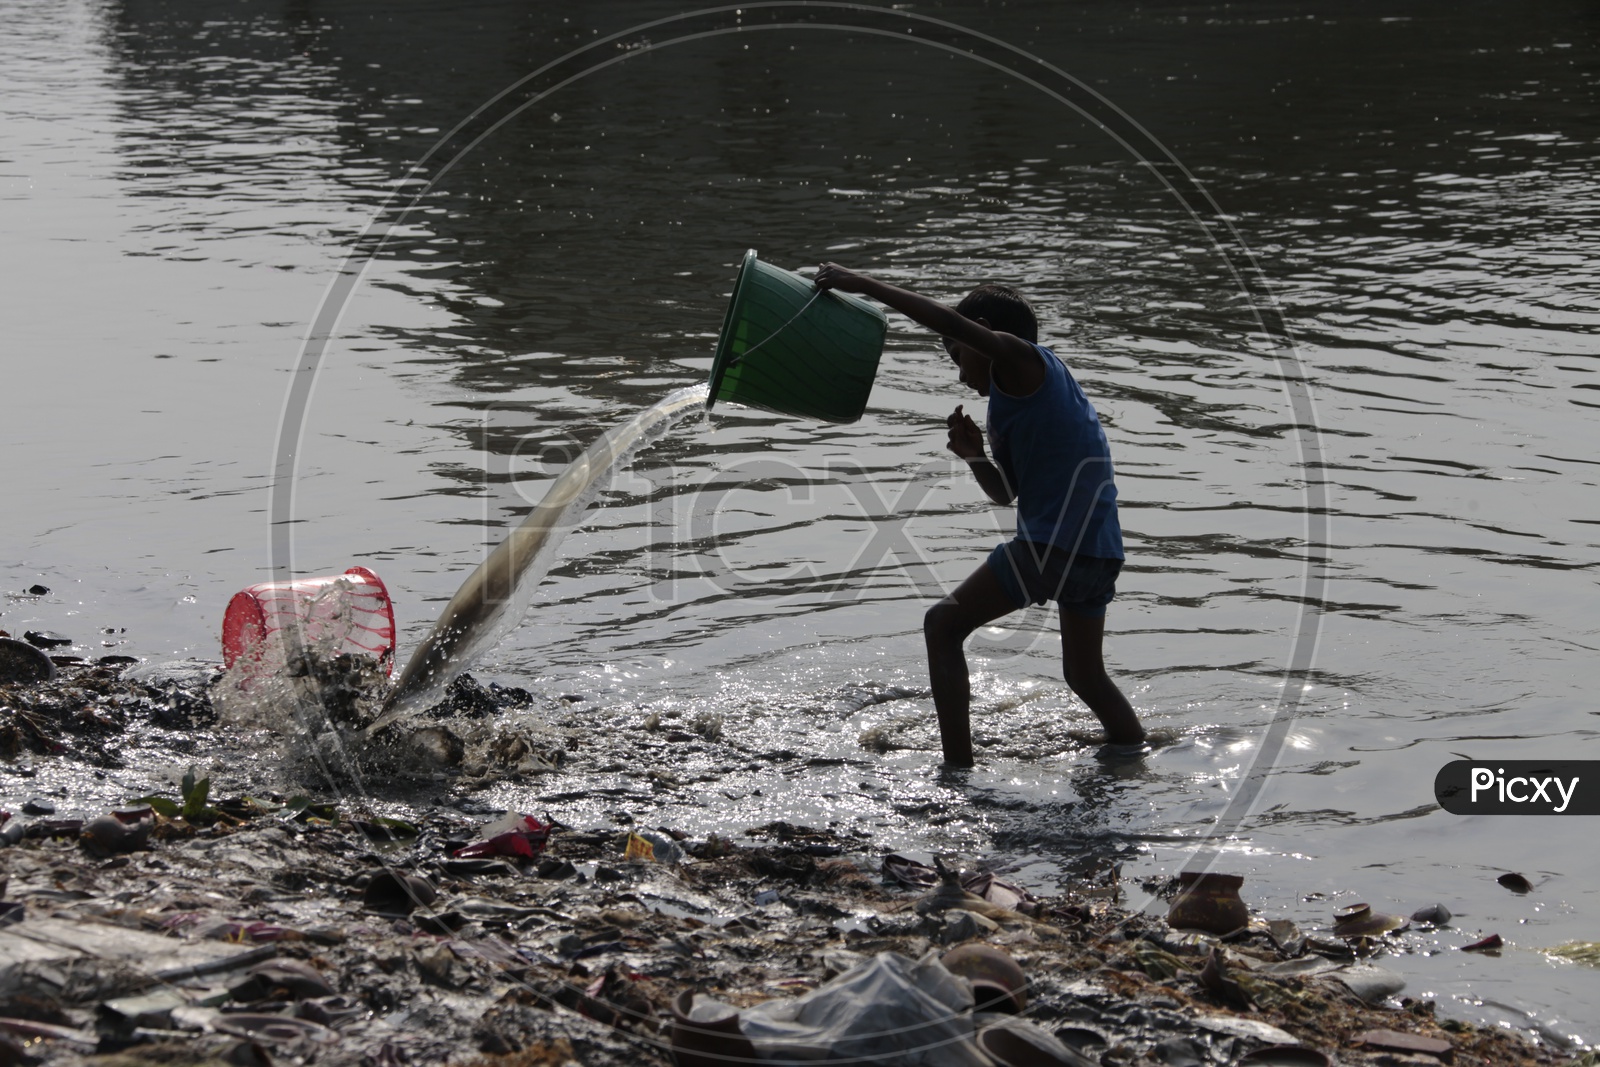 A boy at a dumping garbage at the dump yard